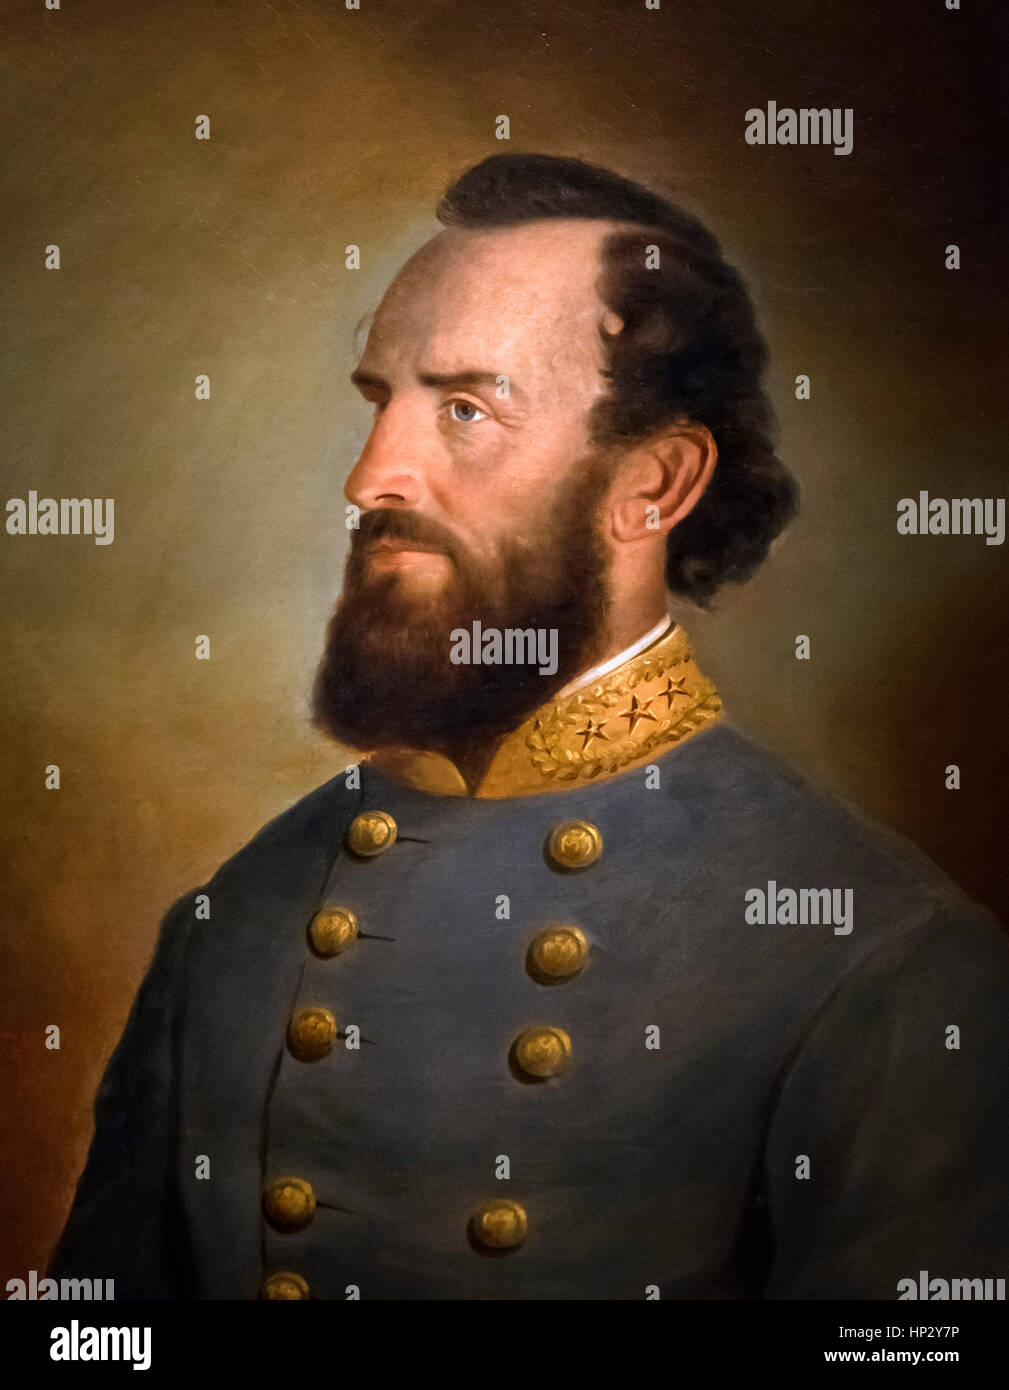 Stonewall Jackson. Porträt der Konföderierten Armee General Thomas Jonathan "Stonewall" Jackson (1824-1863) von J W König, Öl auf Leinwand, 1864 Stockfoto